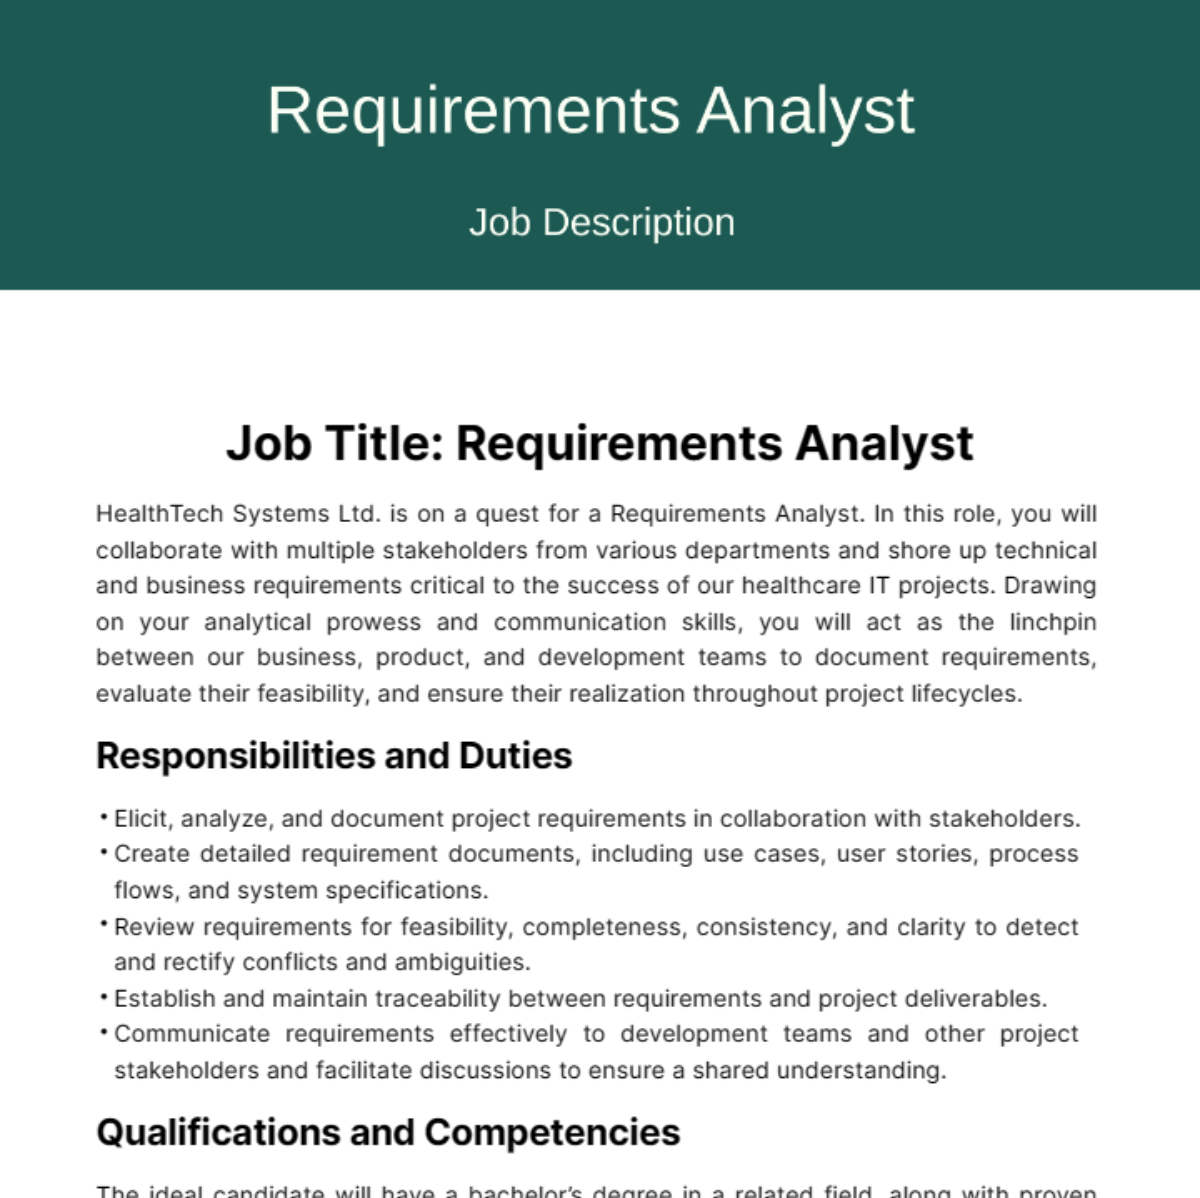 Requirements Analyst Job Description Template